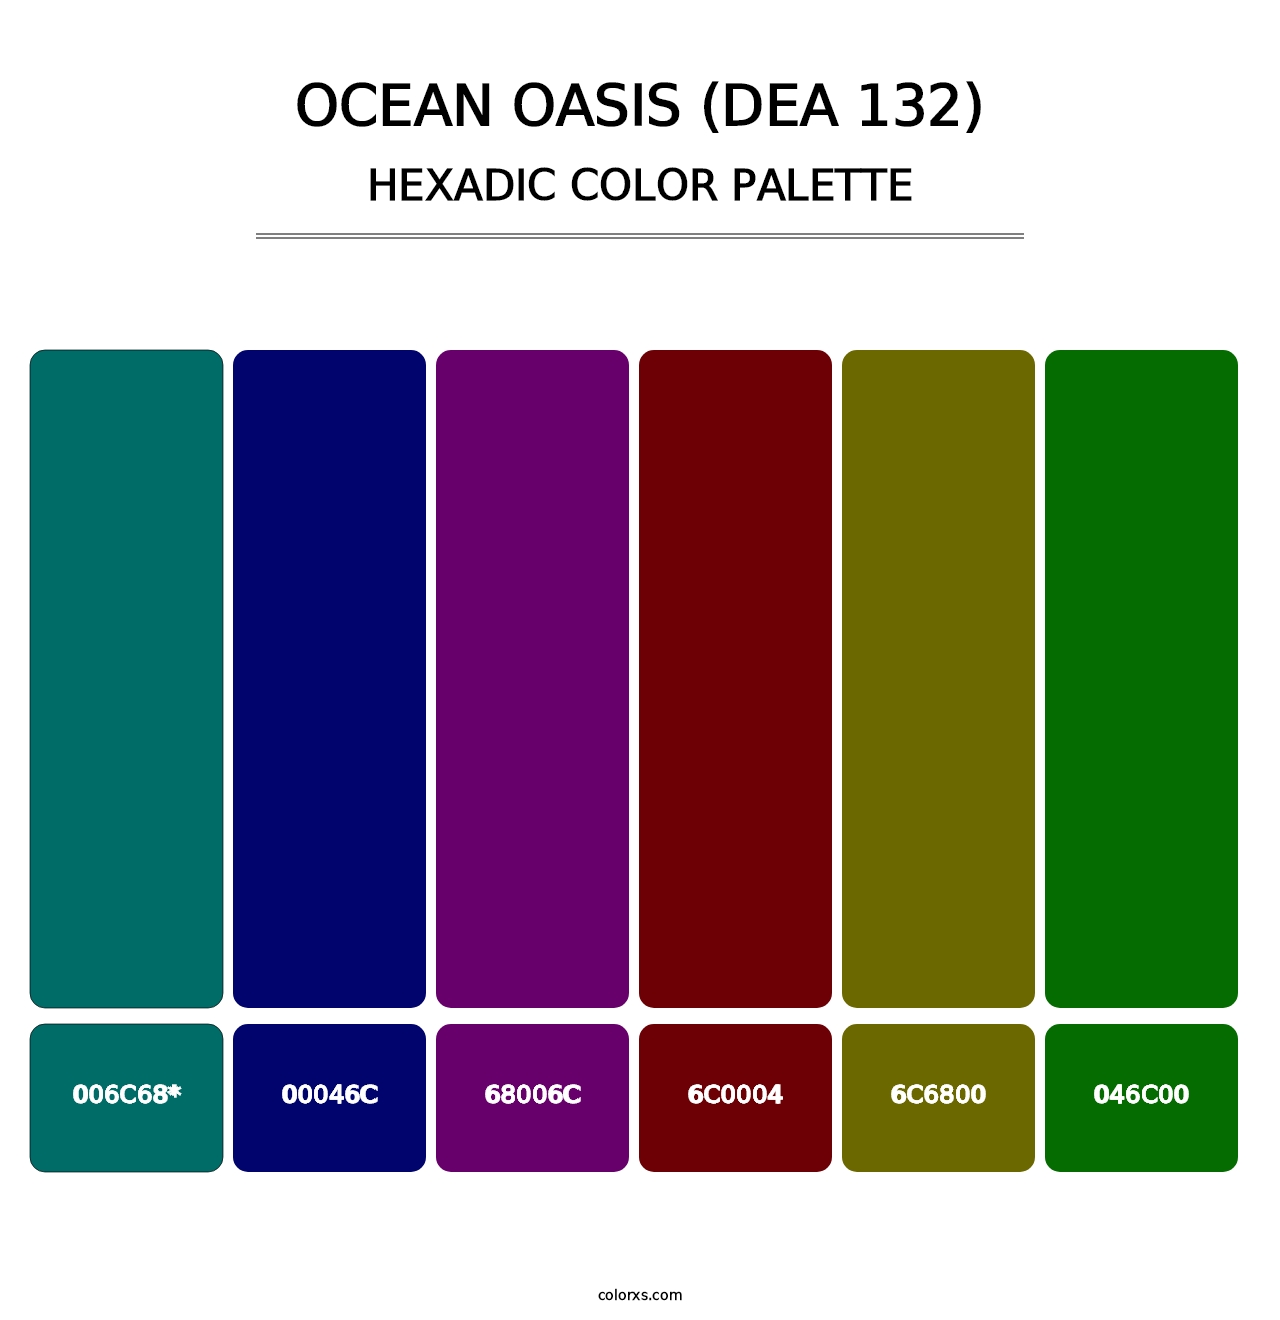 Ocean Oasis (DEA 132) - Hexadic Color Palette